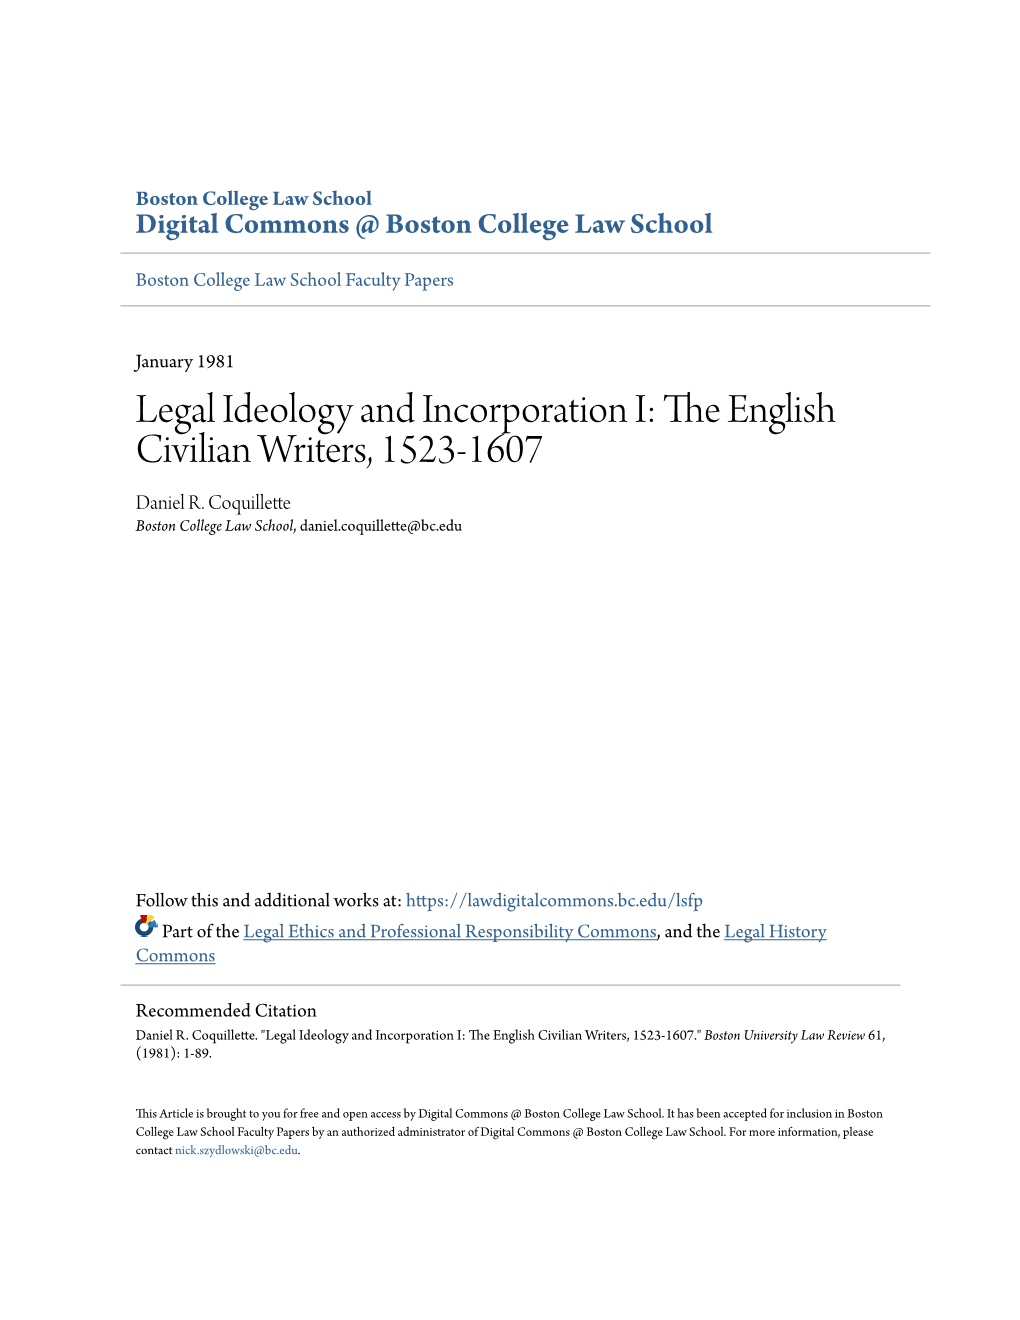 Legal Ideology and Incorporation I: the Ne Glish Civilian Writers, 1523-1607 Daniel R